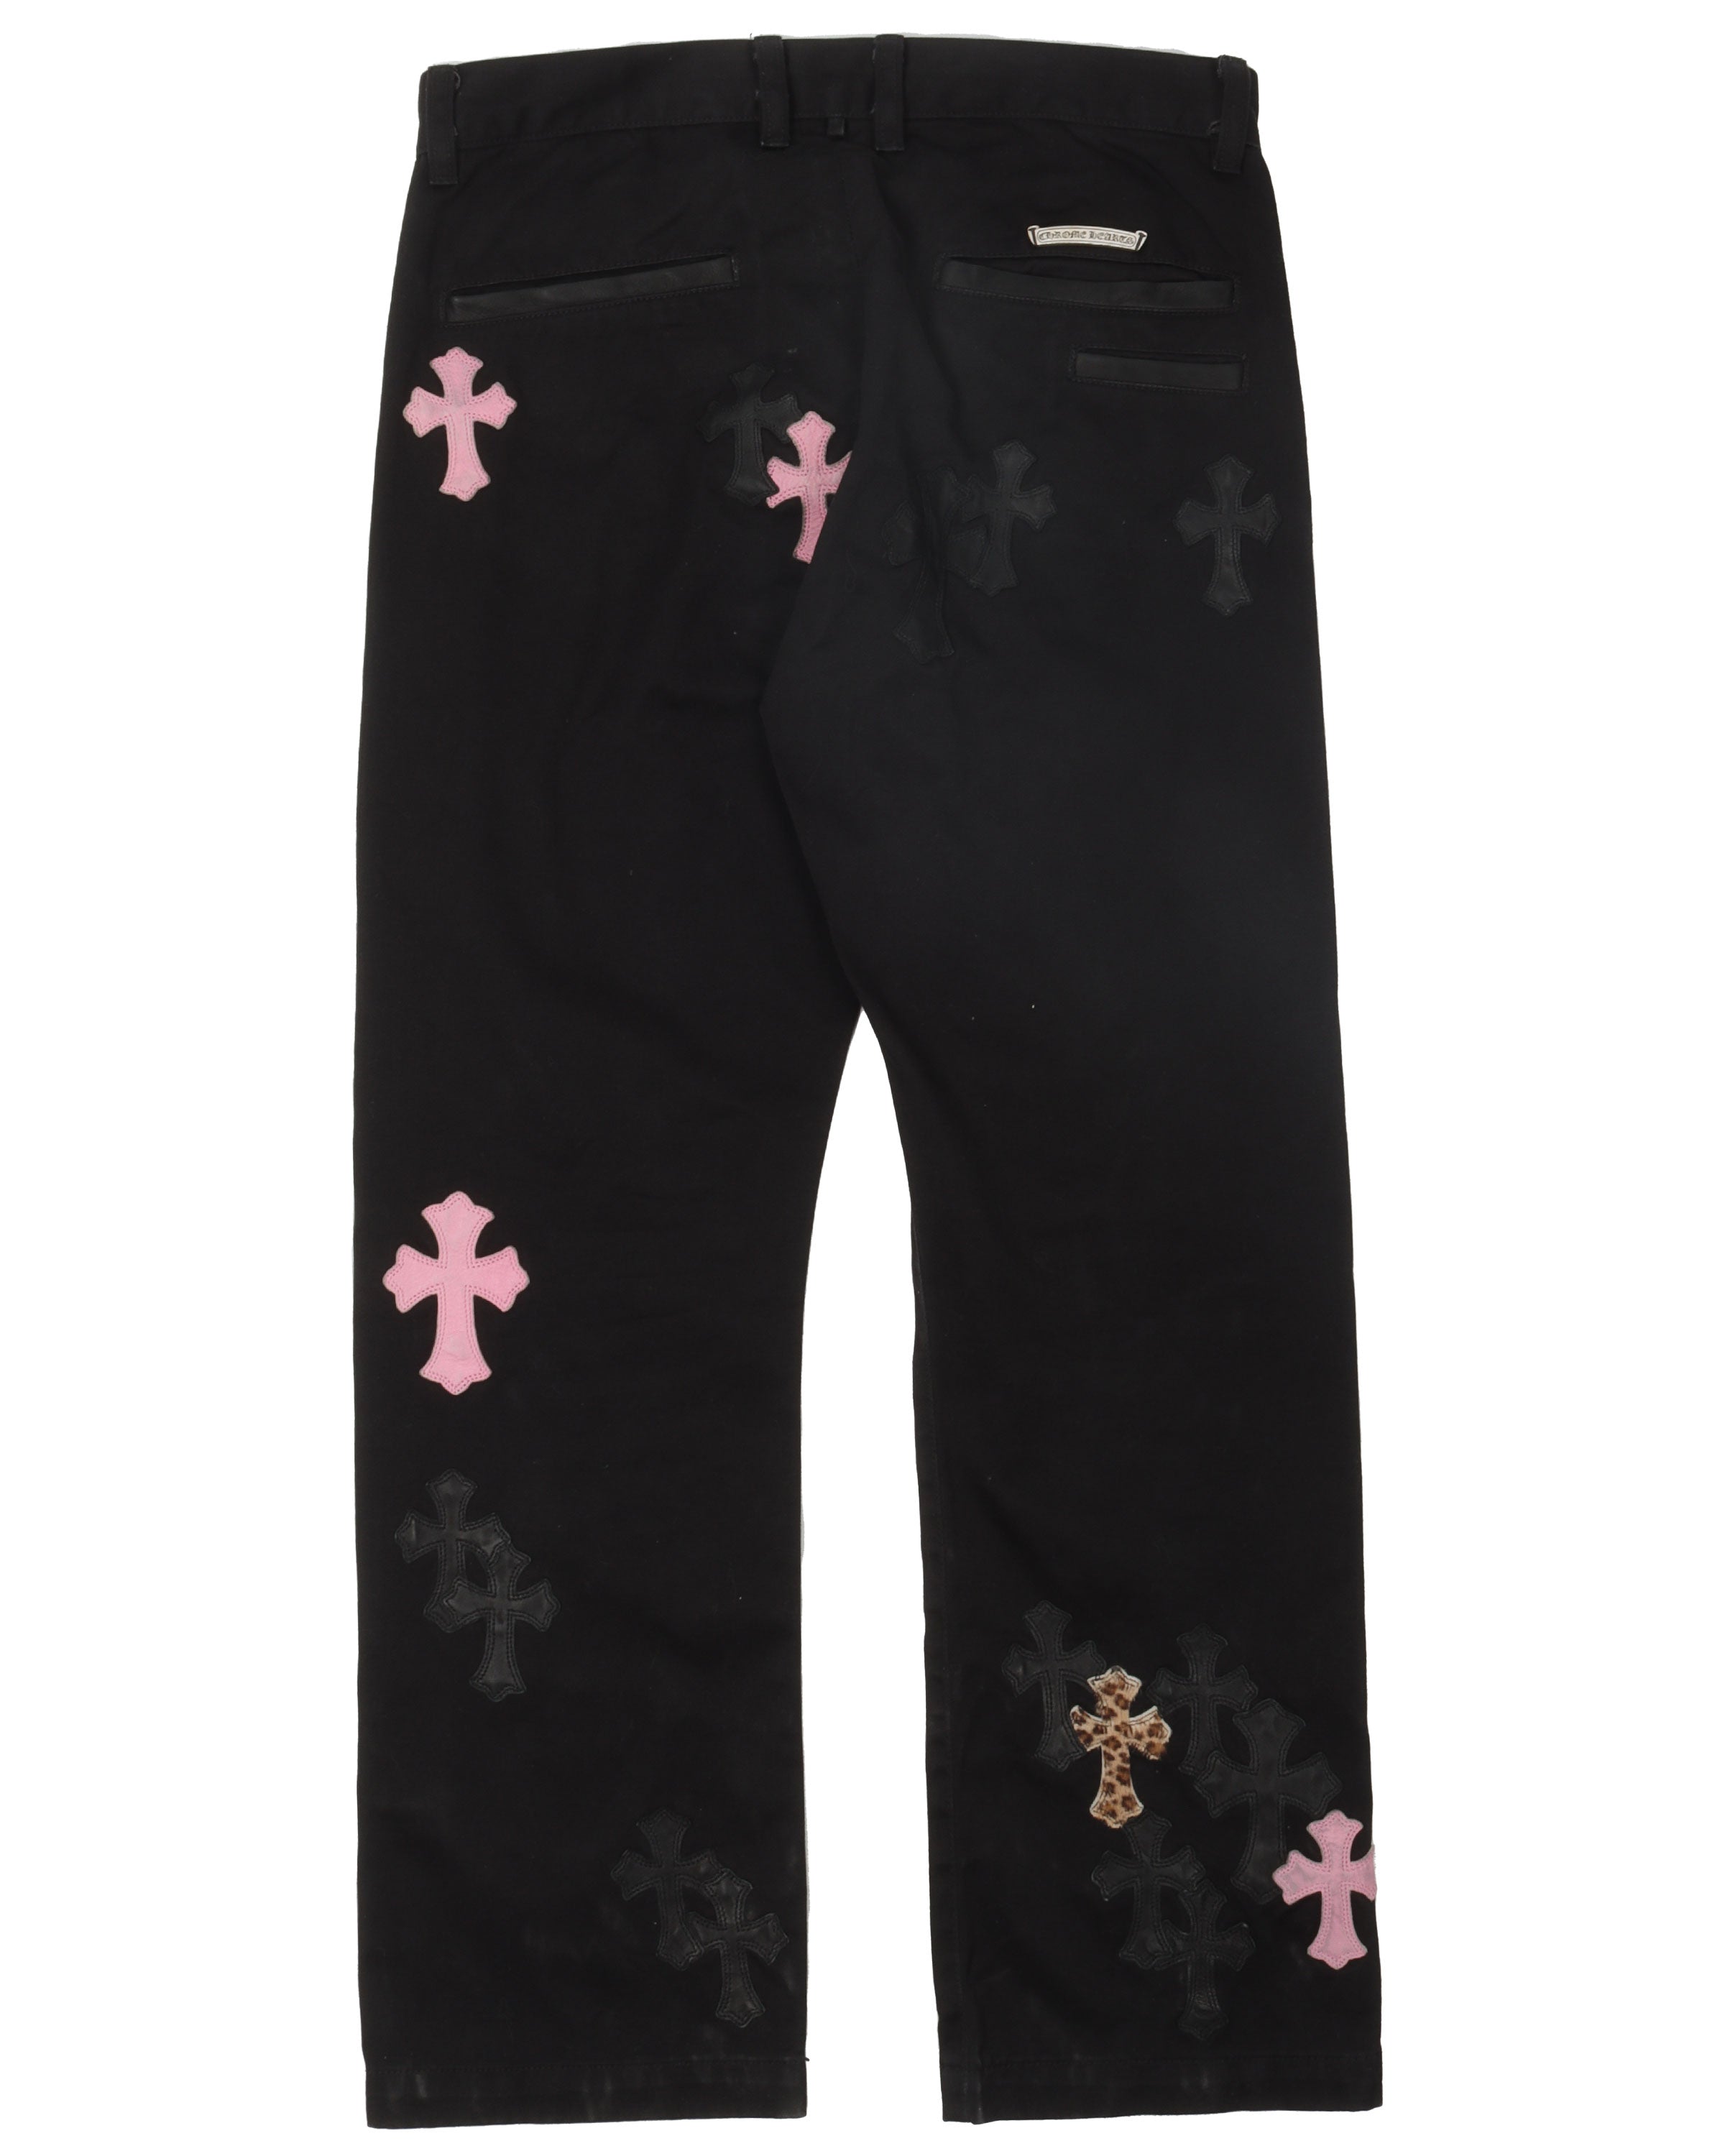 Chino Cross Pants